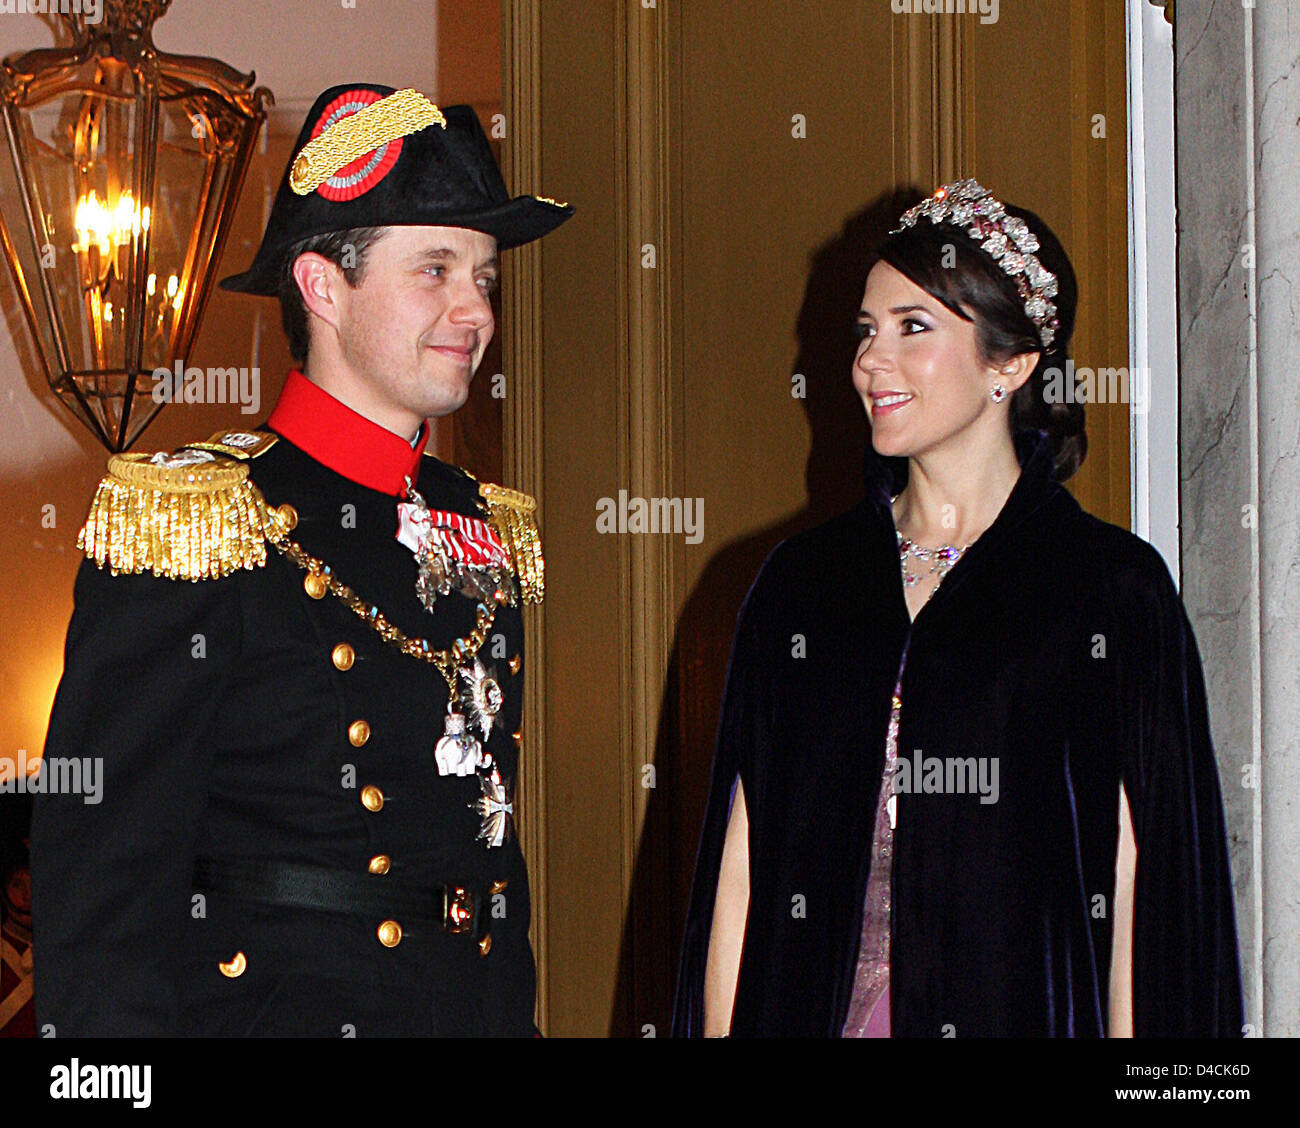 danish-crown-princess-mary-and-her-husband-crown-prince-frederik-arrive-D4CK6D.jpg